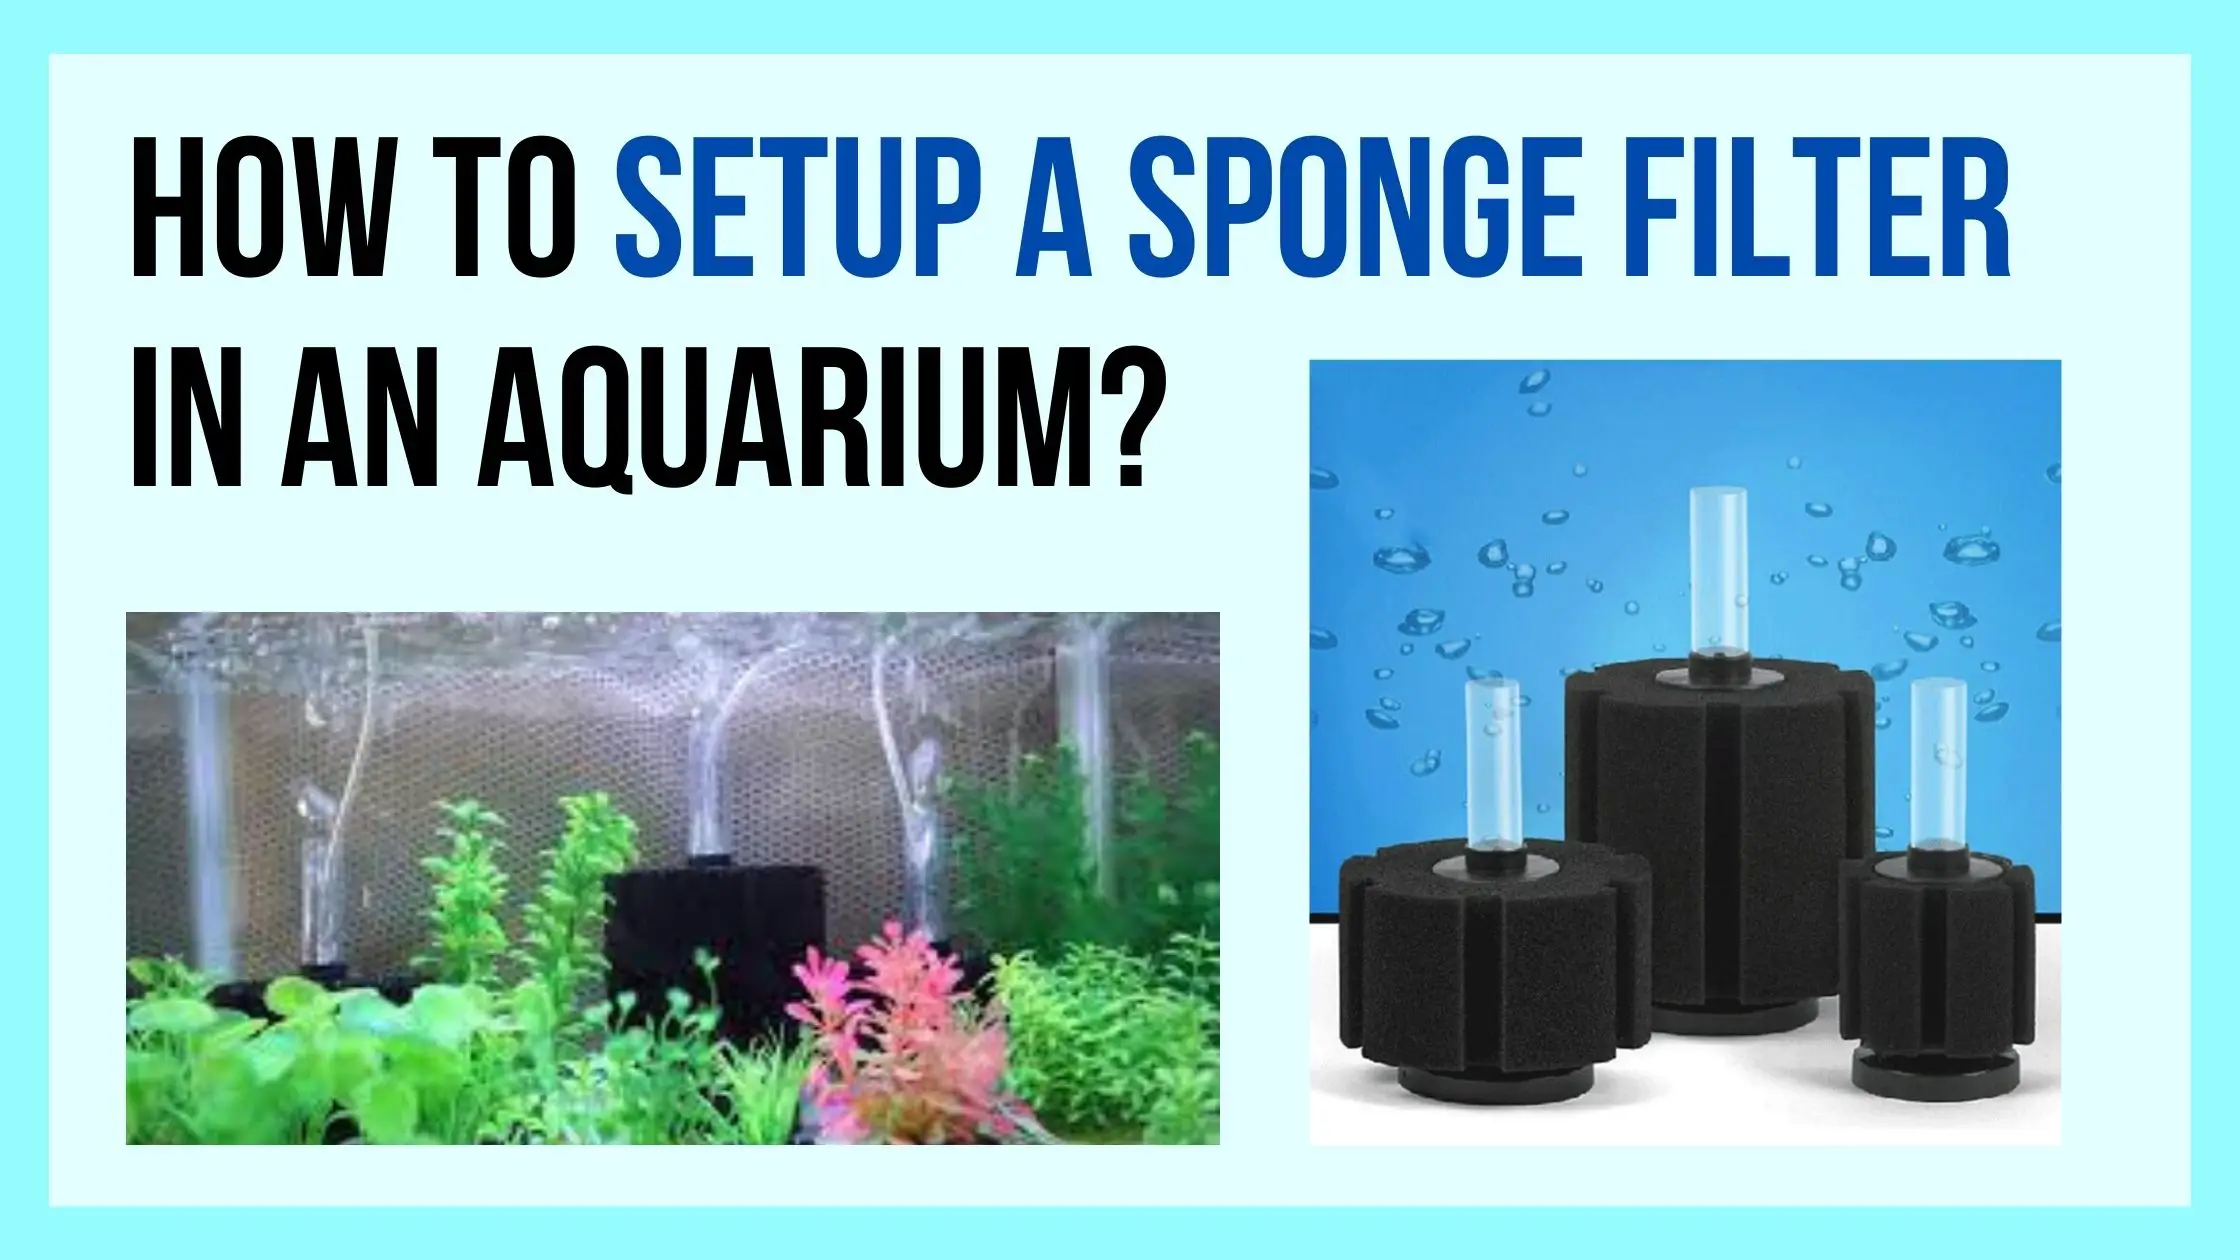 How to Setup a Sponge Filter in an Aquarium